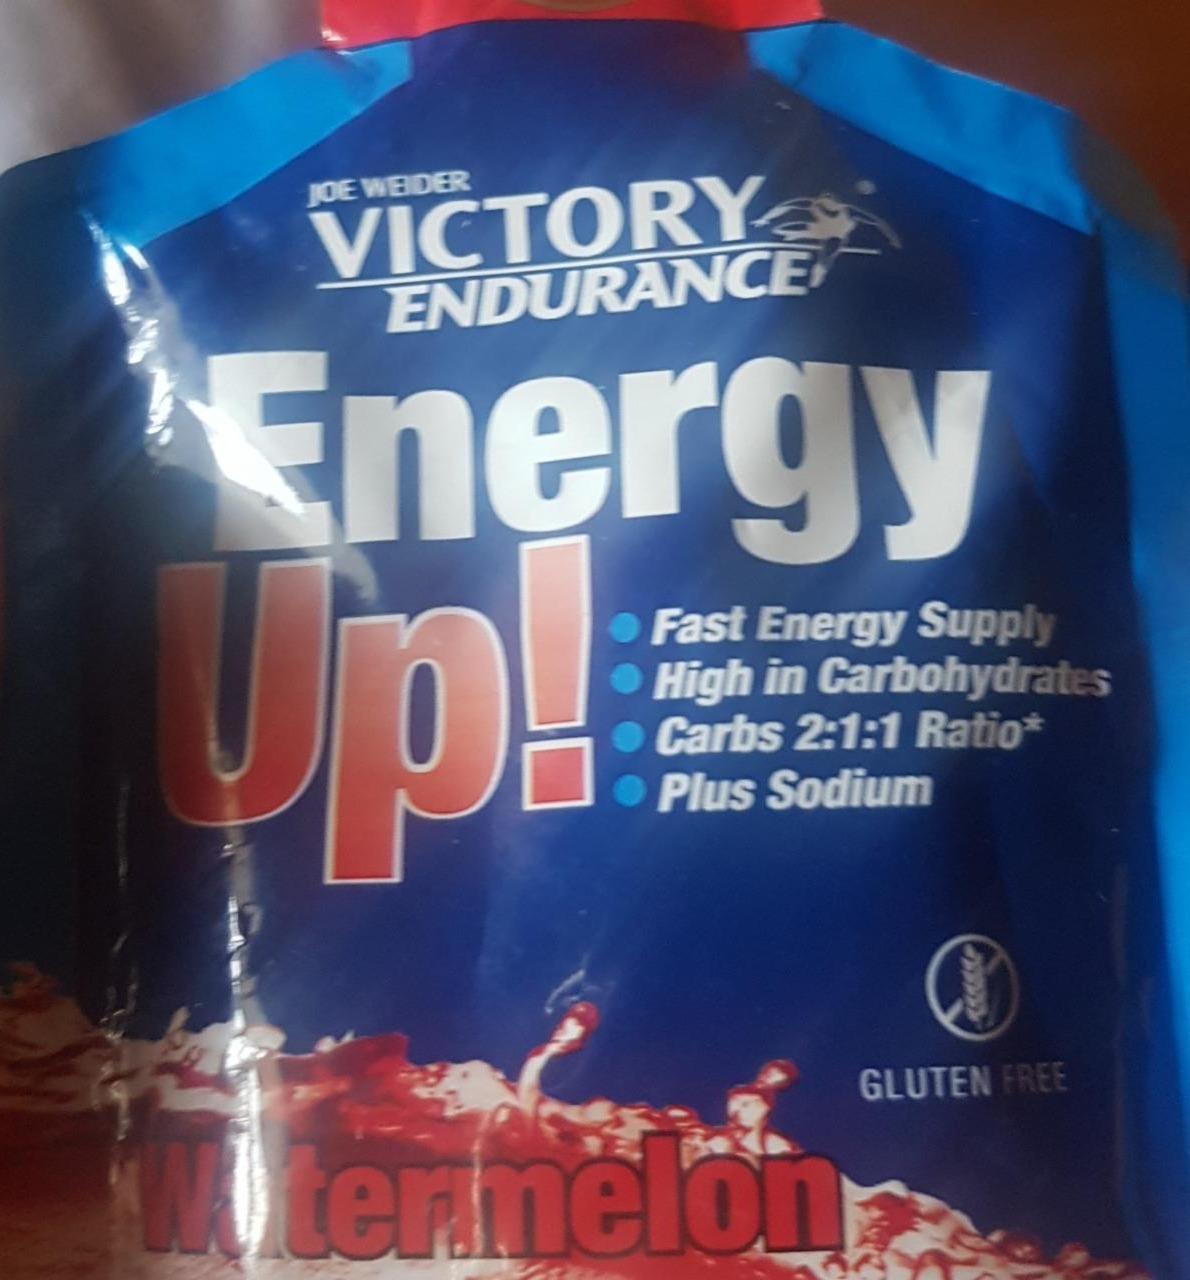 Fotografie - Energy Up! Watermelon Victory Endurance